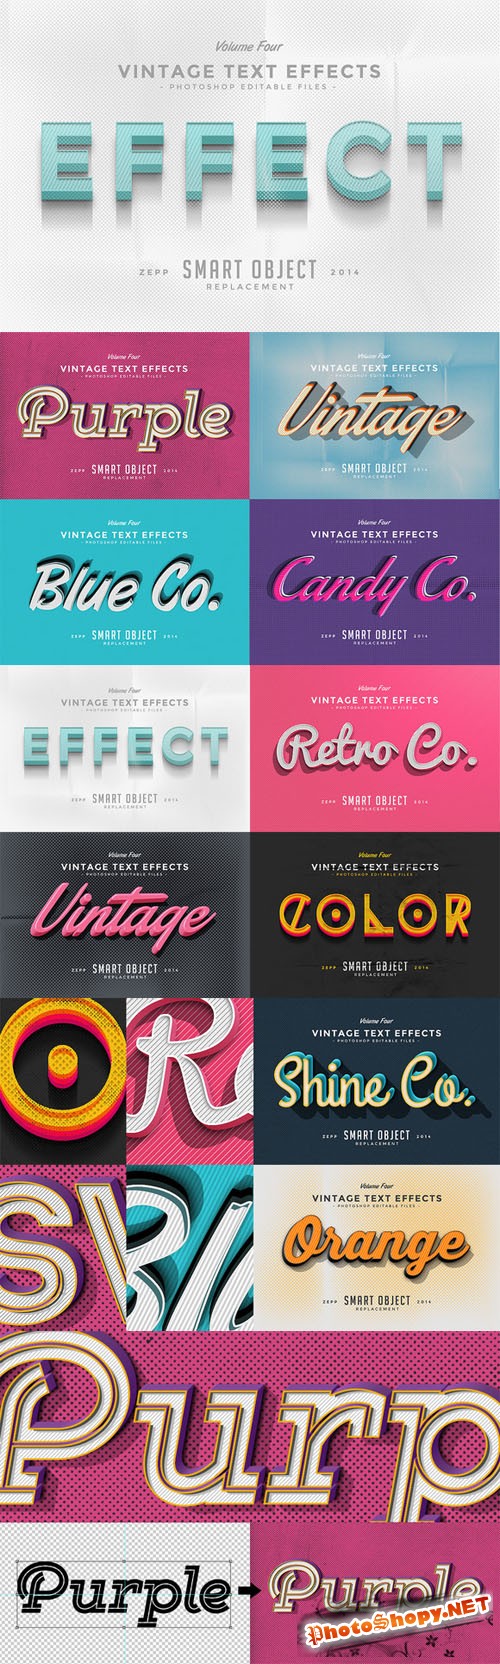 CreativeMarket - Vintage Text Effects Vol.4